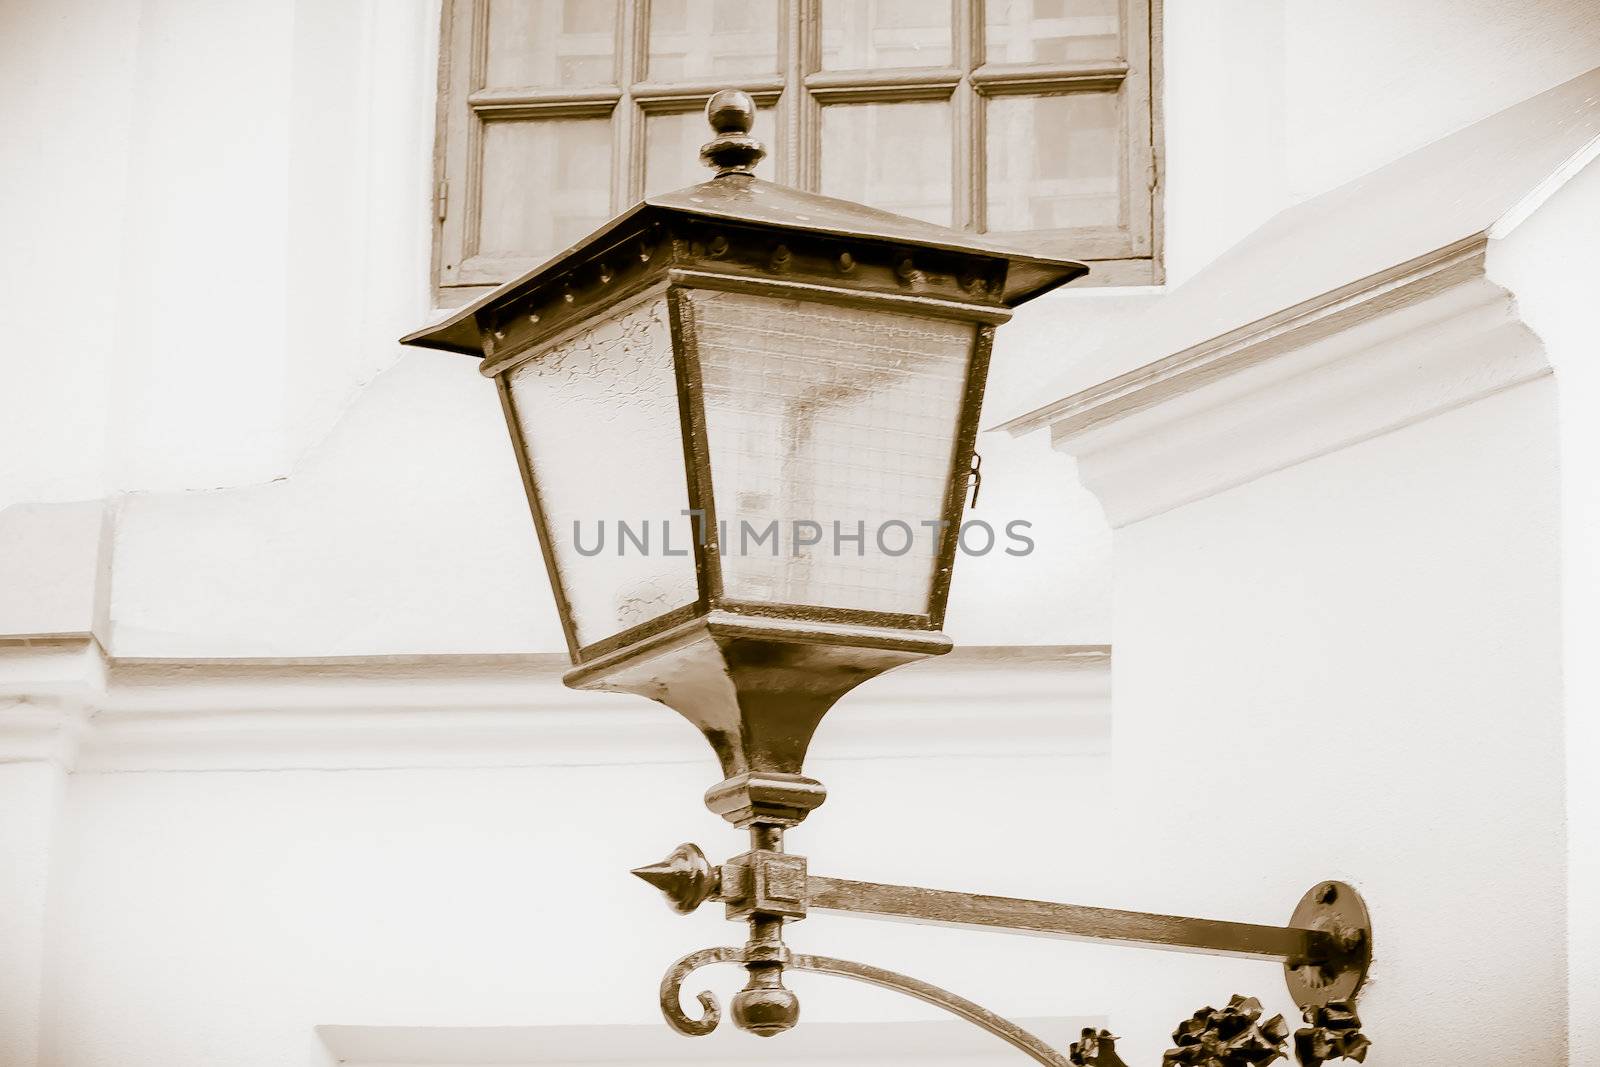 Old-fashioned lantern by georgenightingale